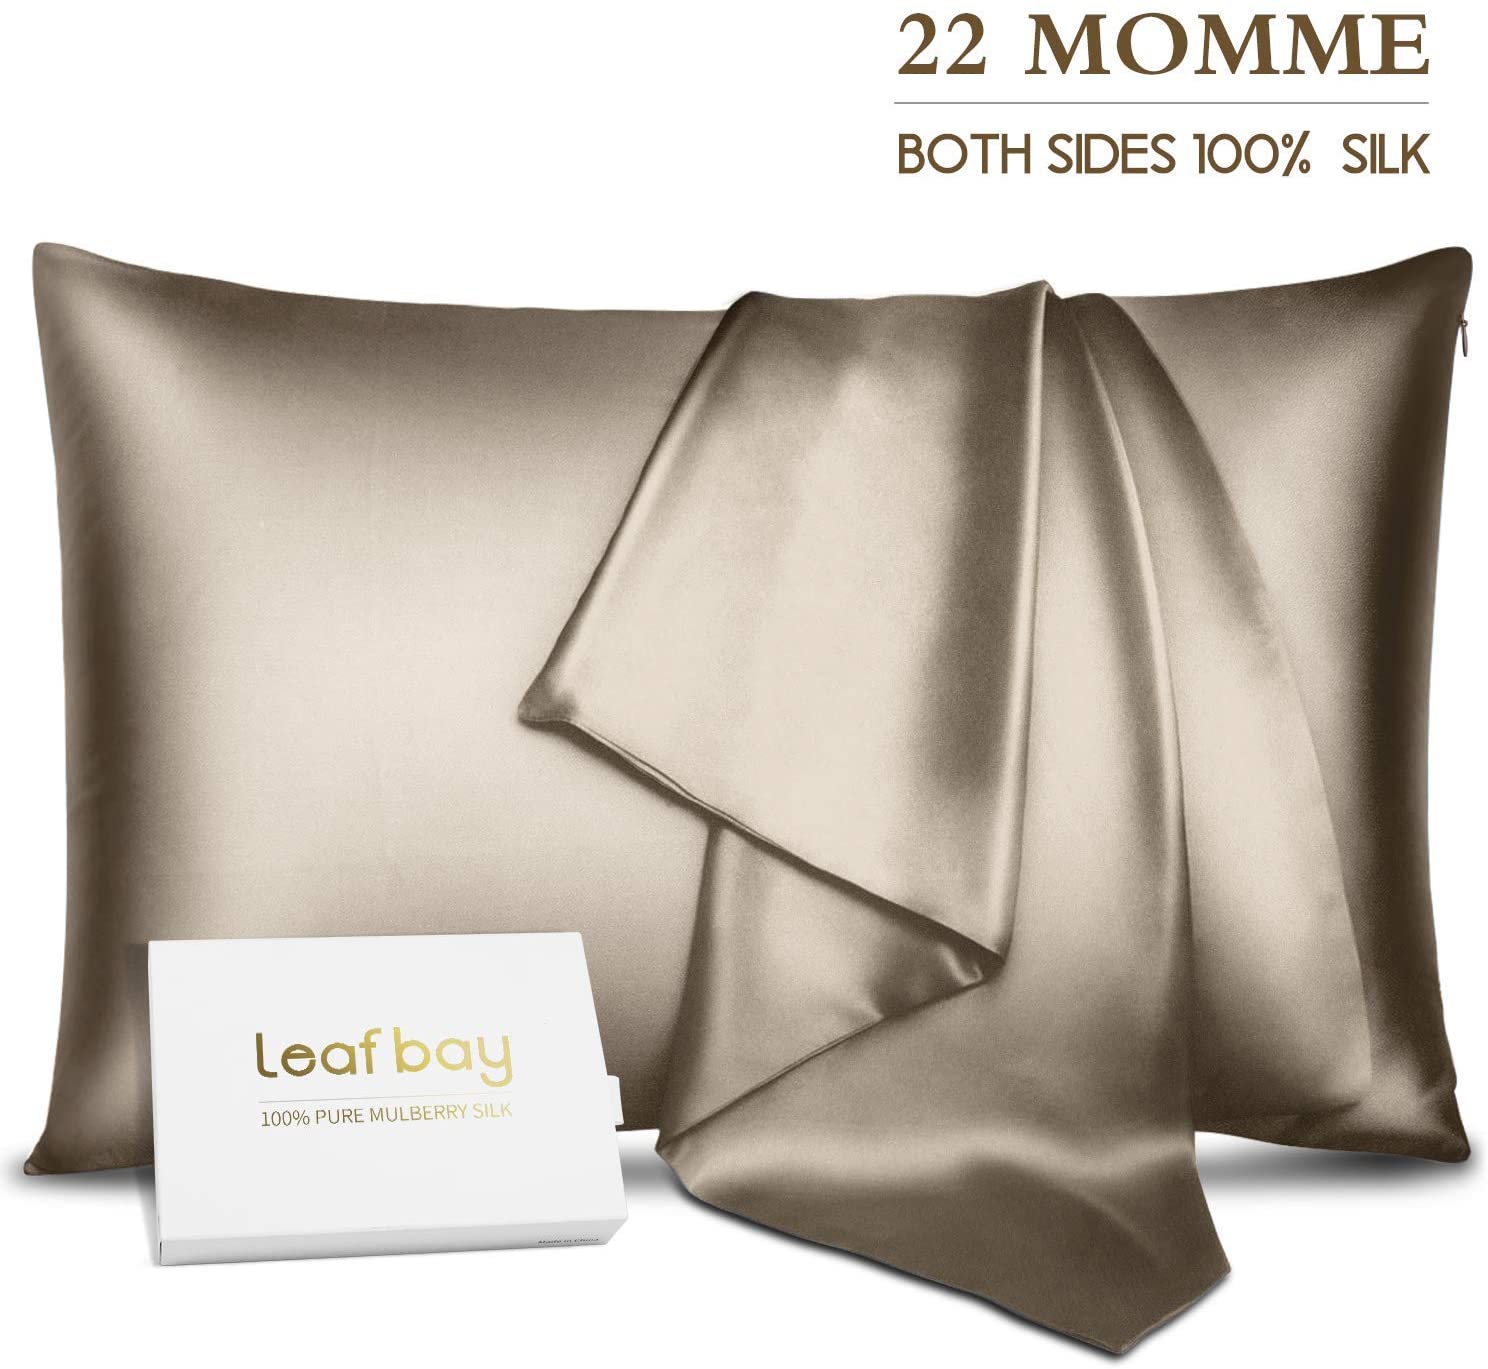 Leafbay Allergen Proof Mulberry Silk Pillowcase